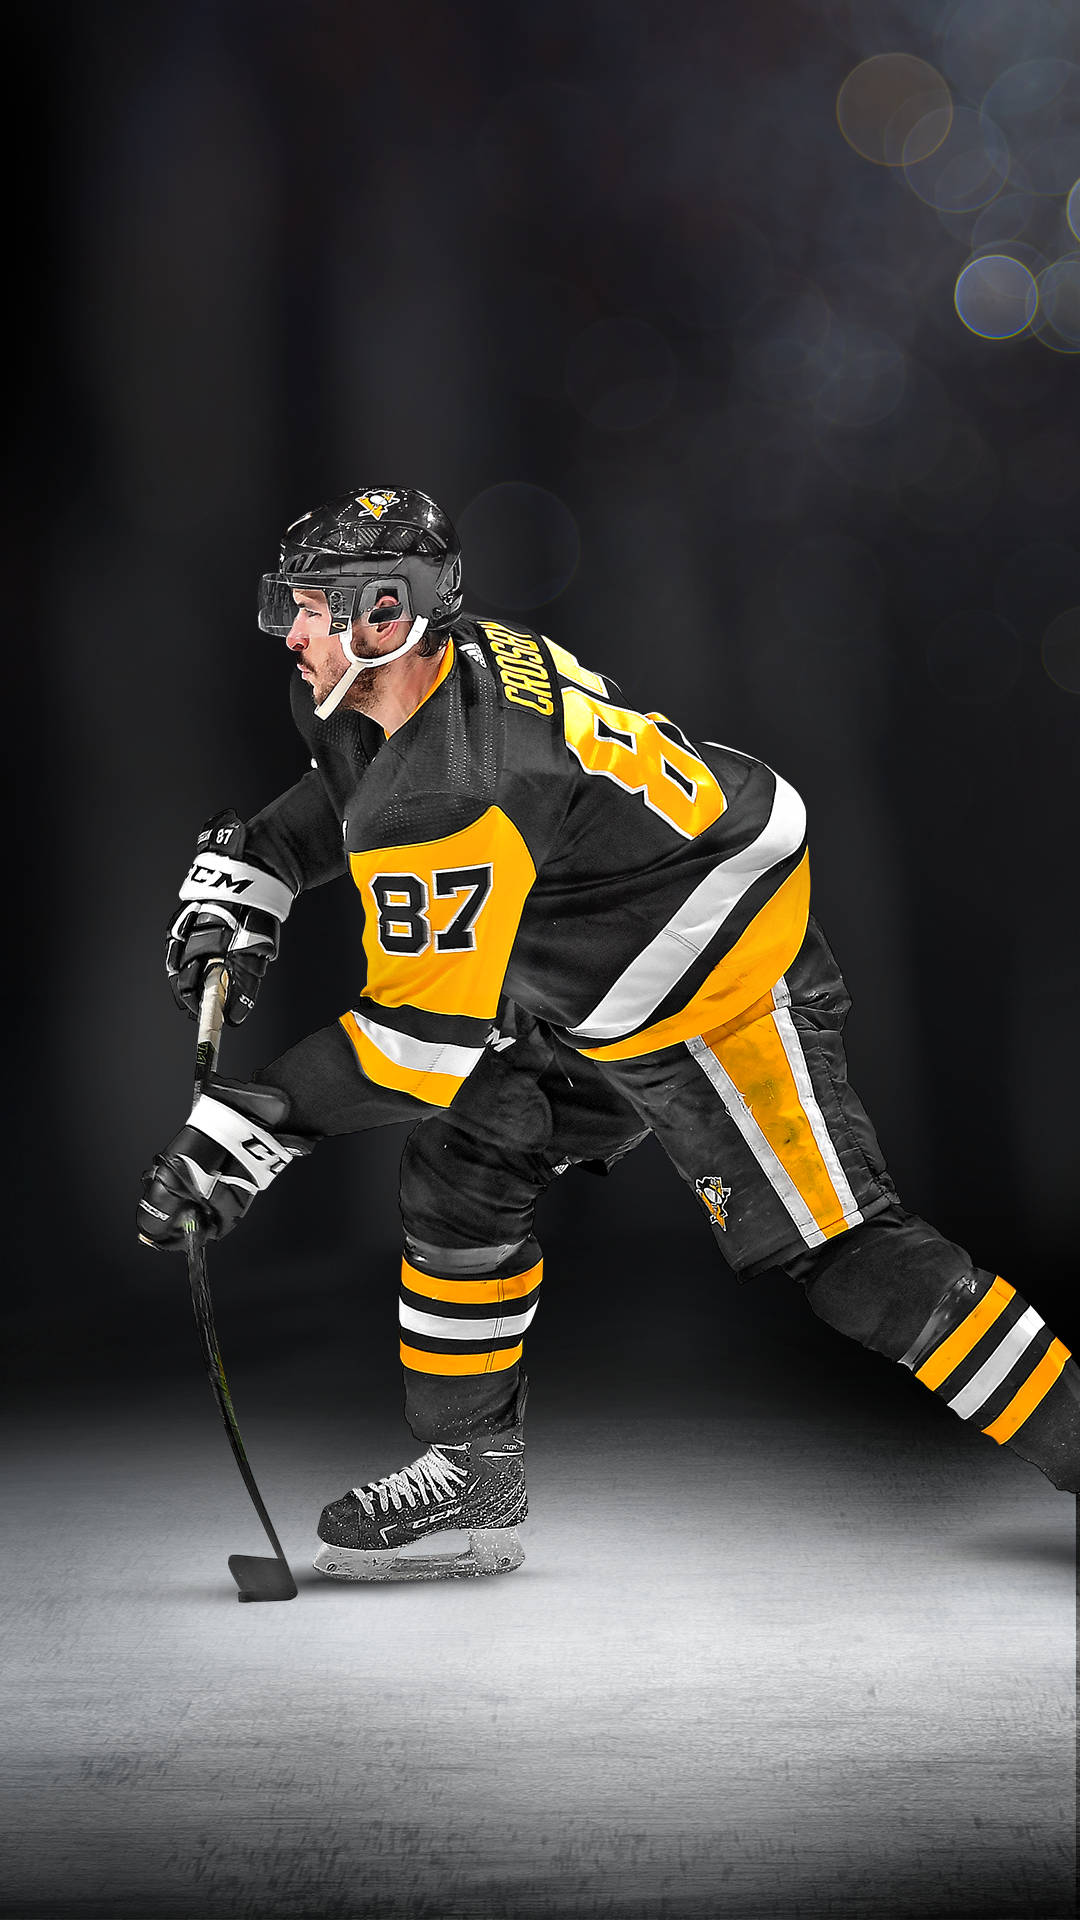 Pittsburgh Penguins Number 87 Athlete Wallpaper